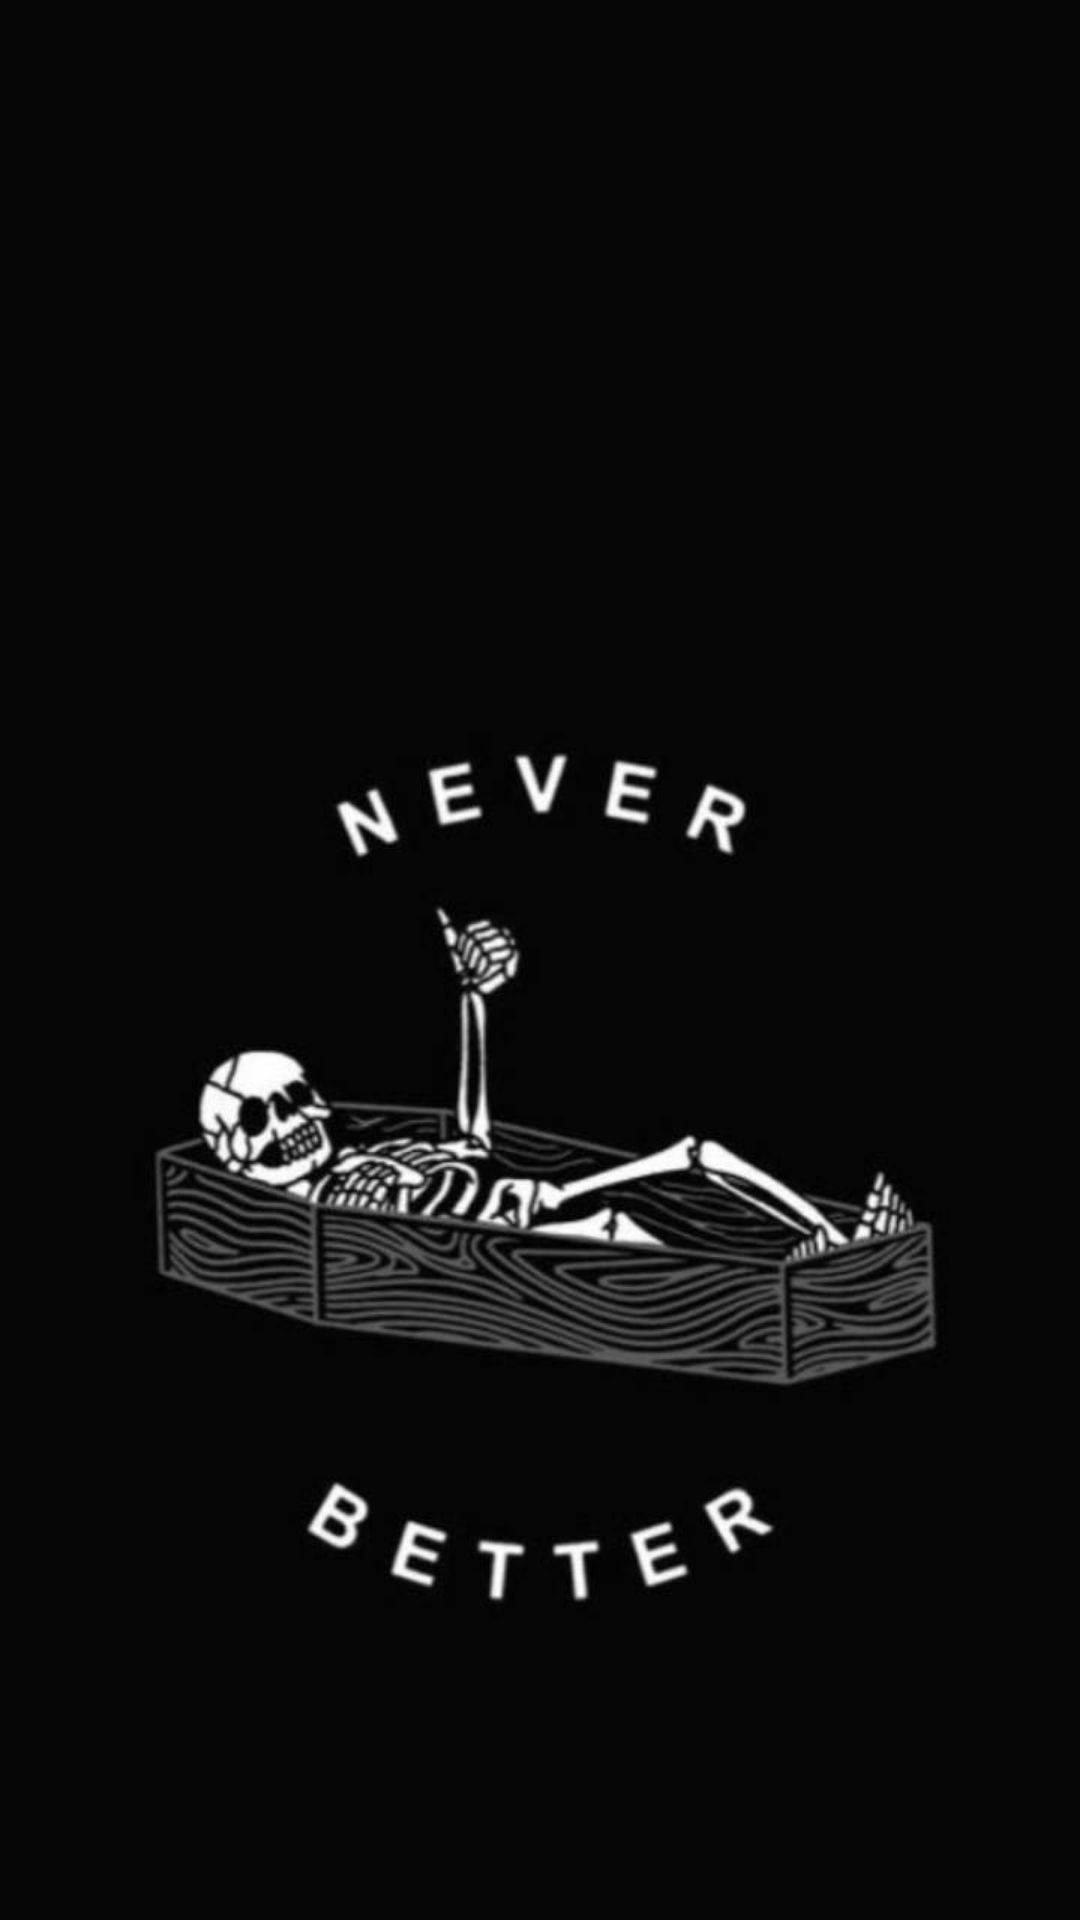 Skeleton Meme Coffin